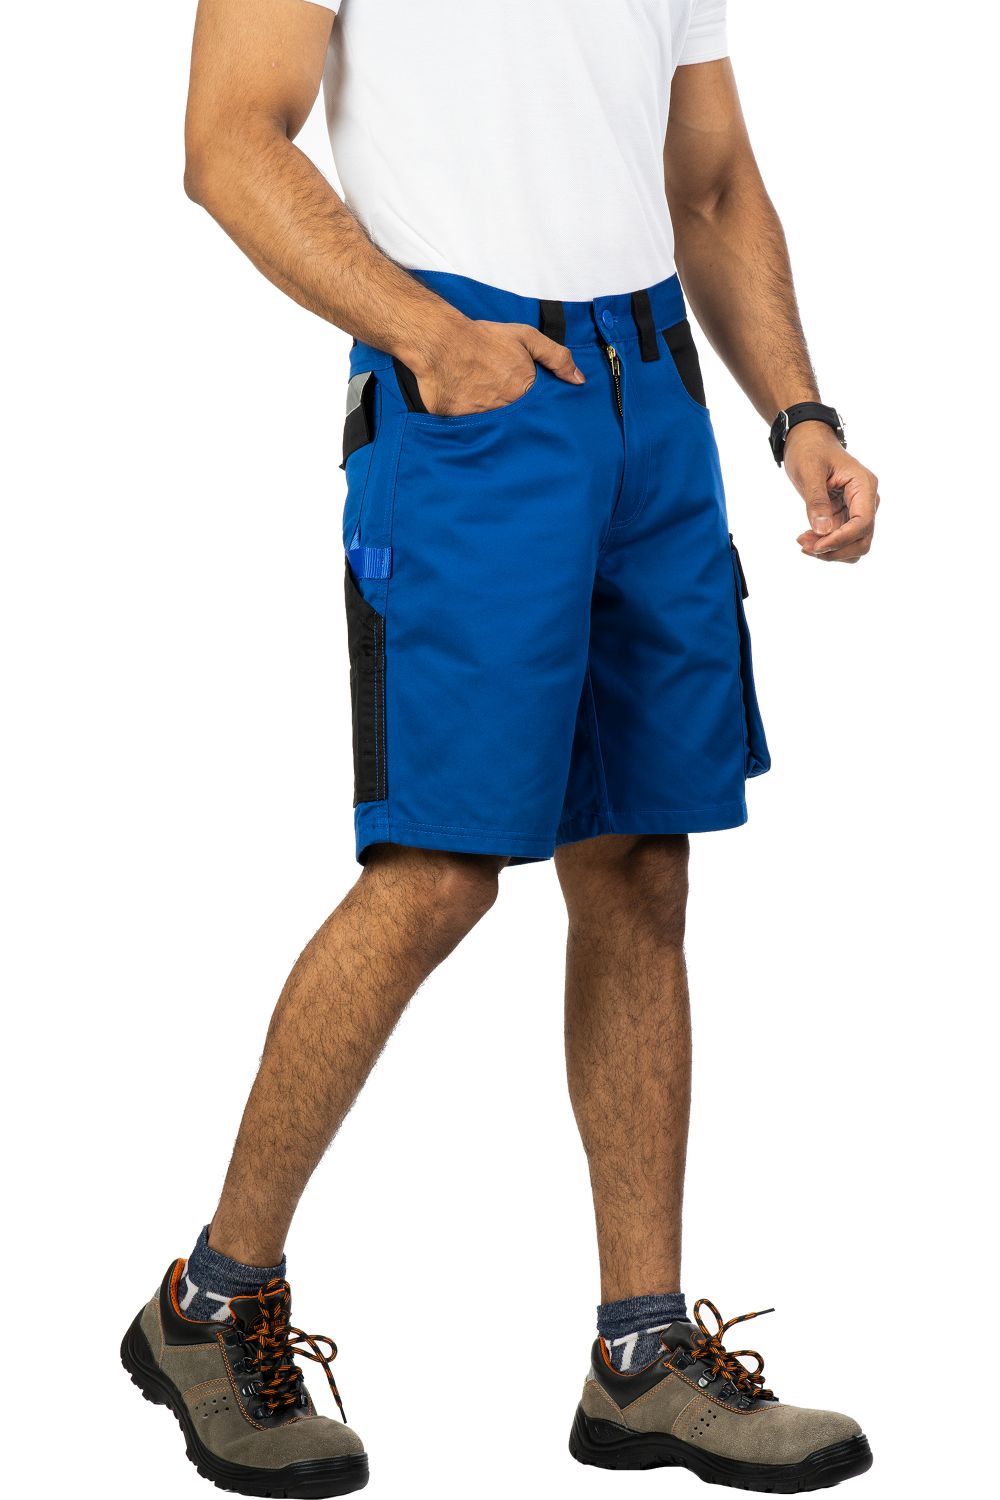 industrial design ergonomic blue-black shorts